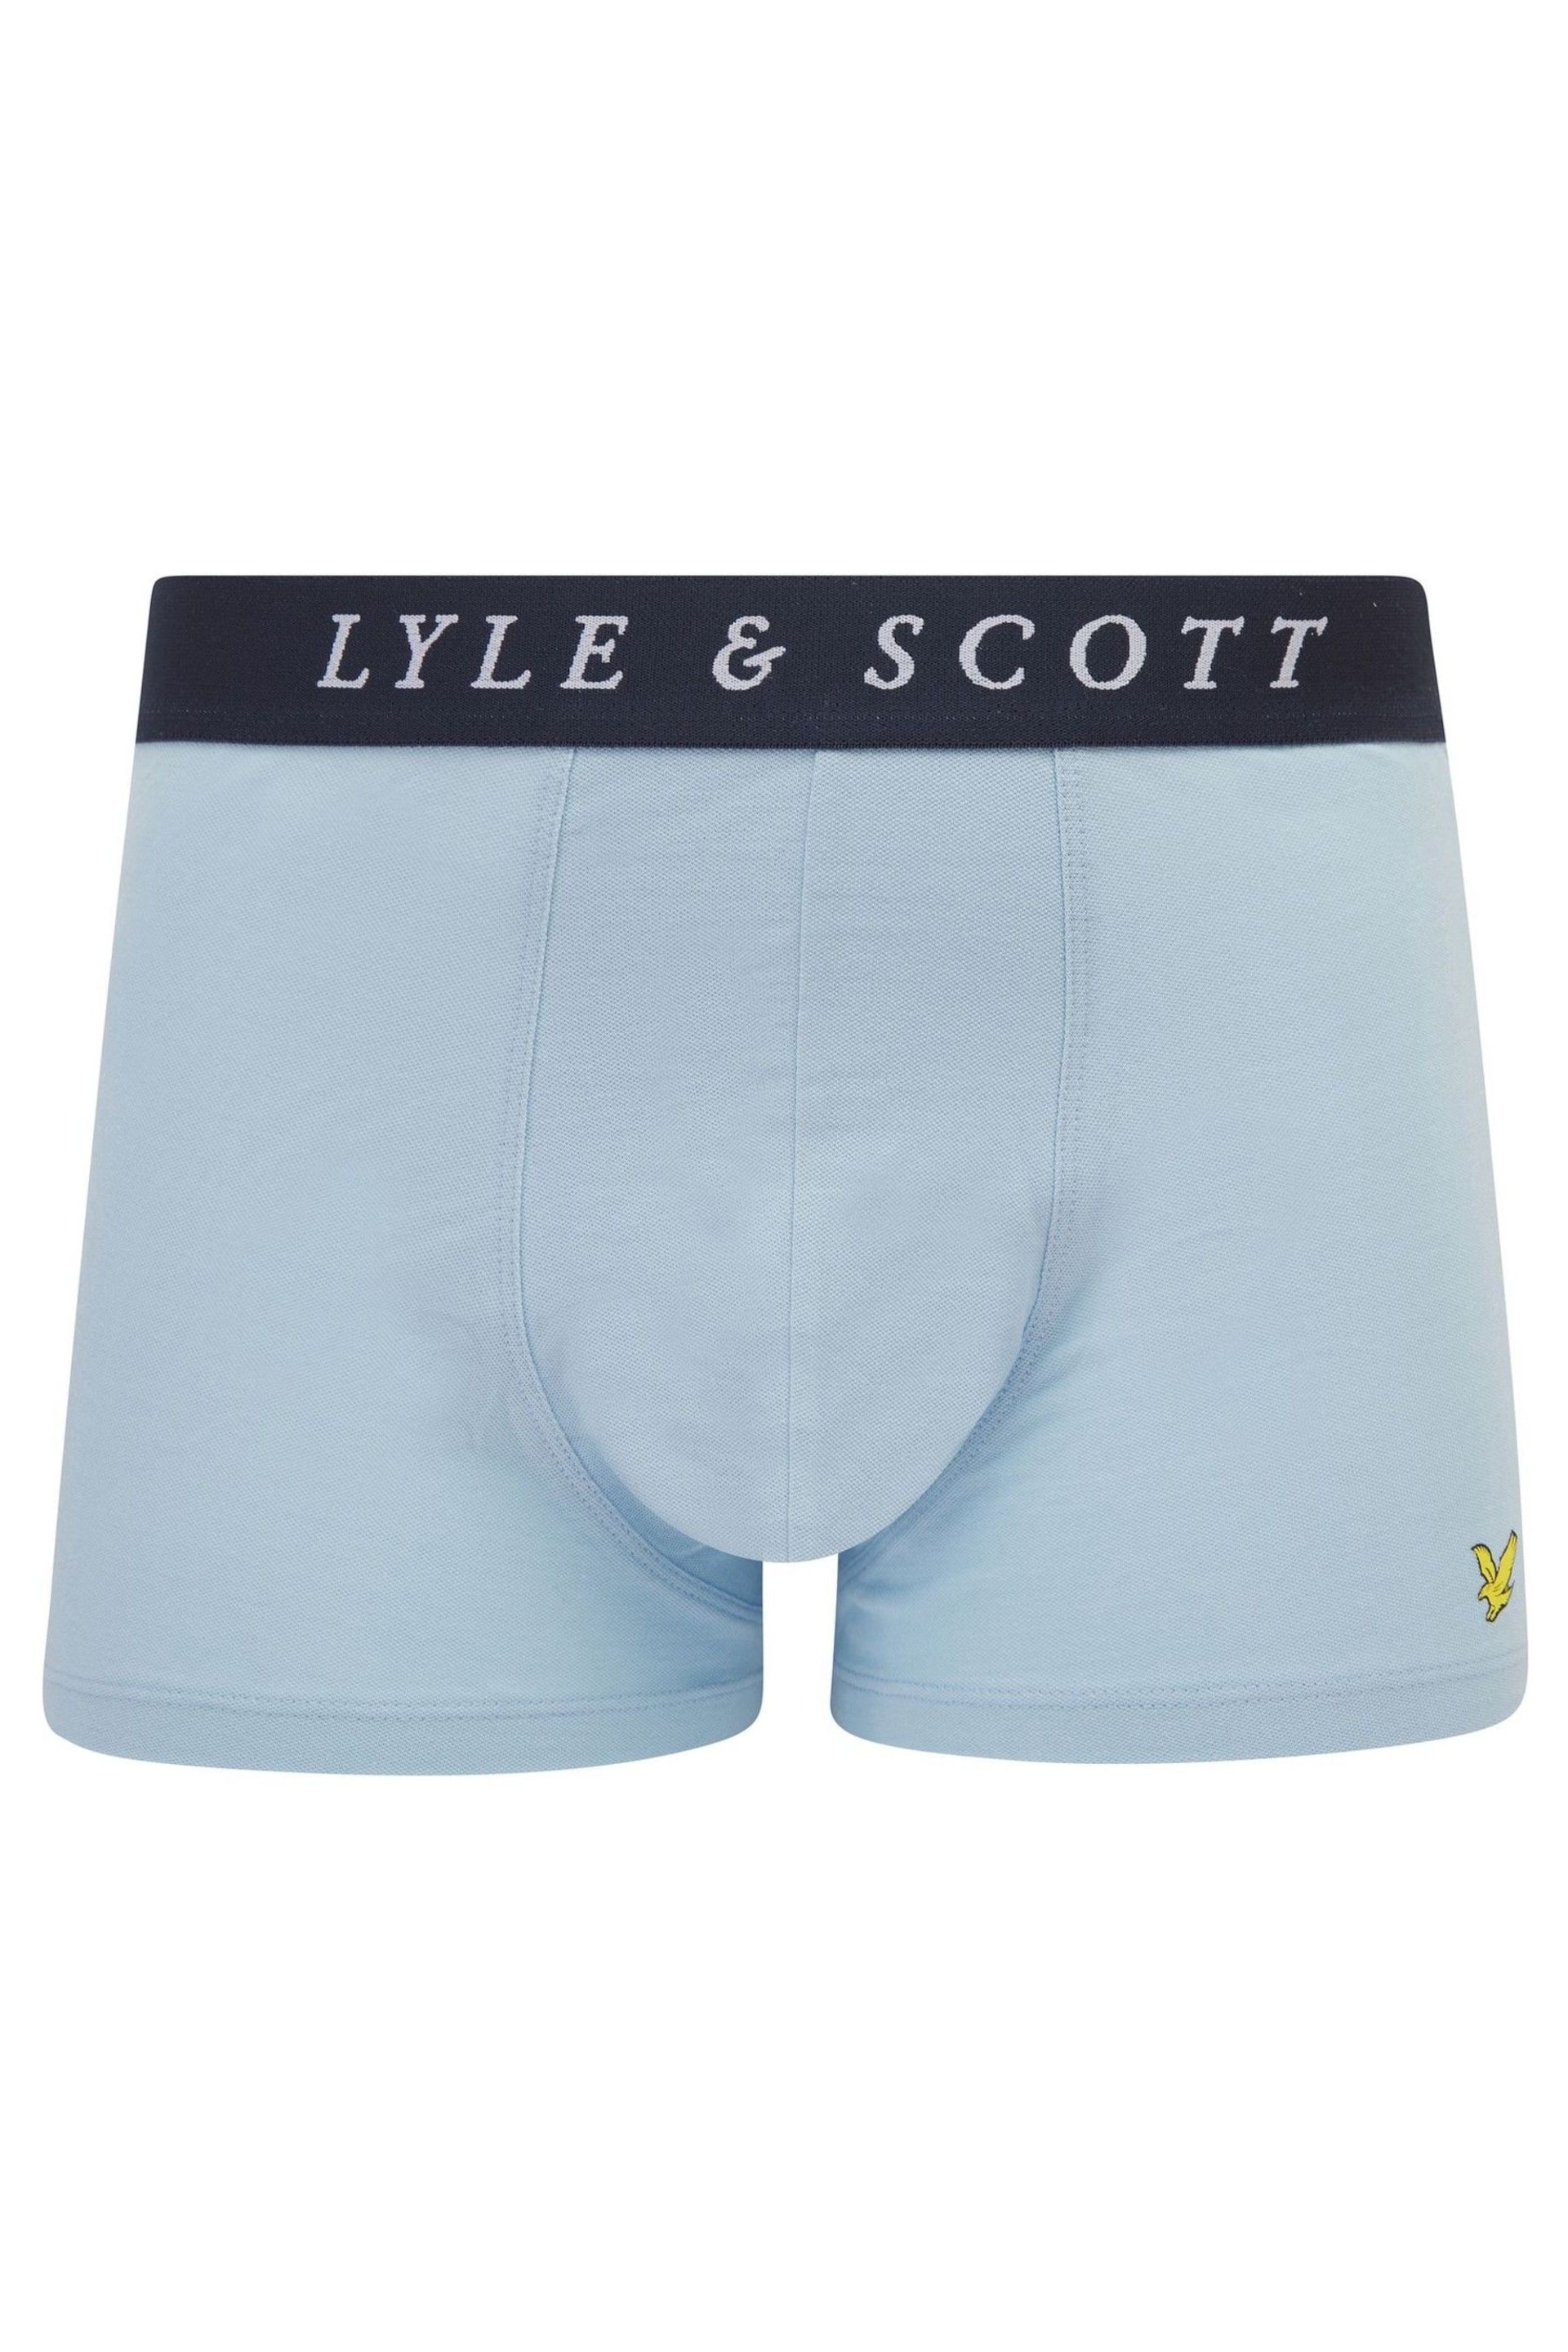 Lyle & Scott Multi Underwear Trunks 3 Pack - Image 2 of 4